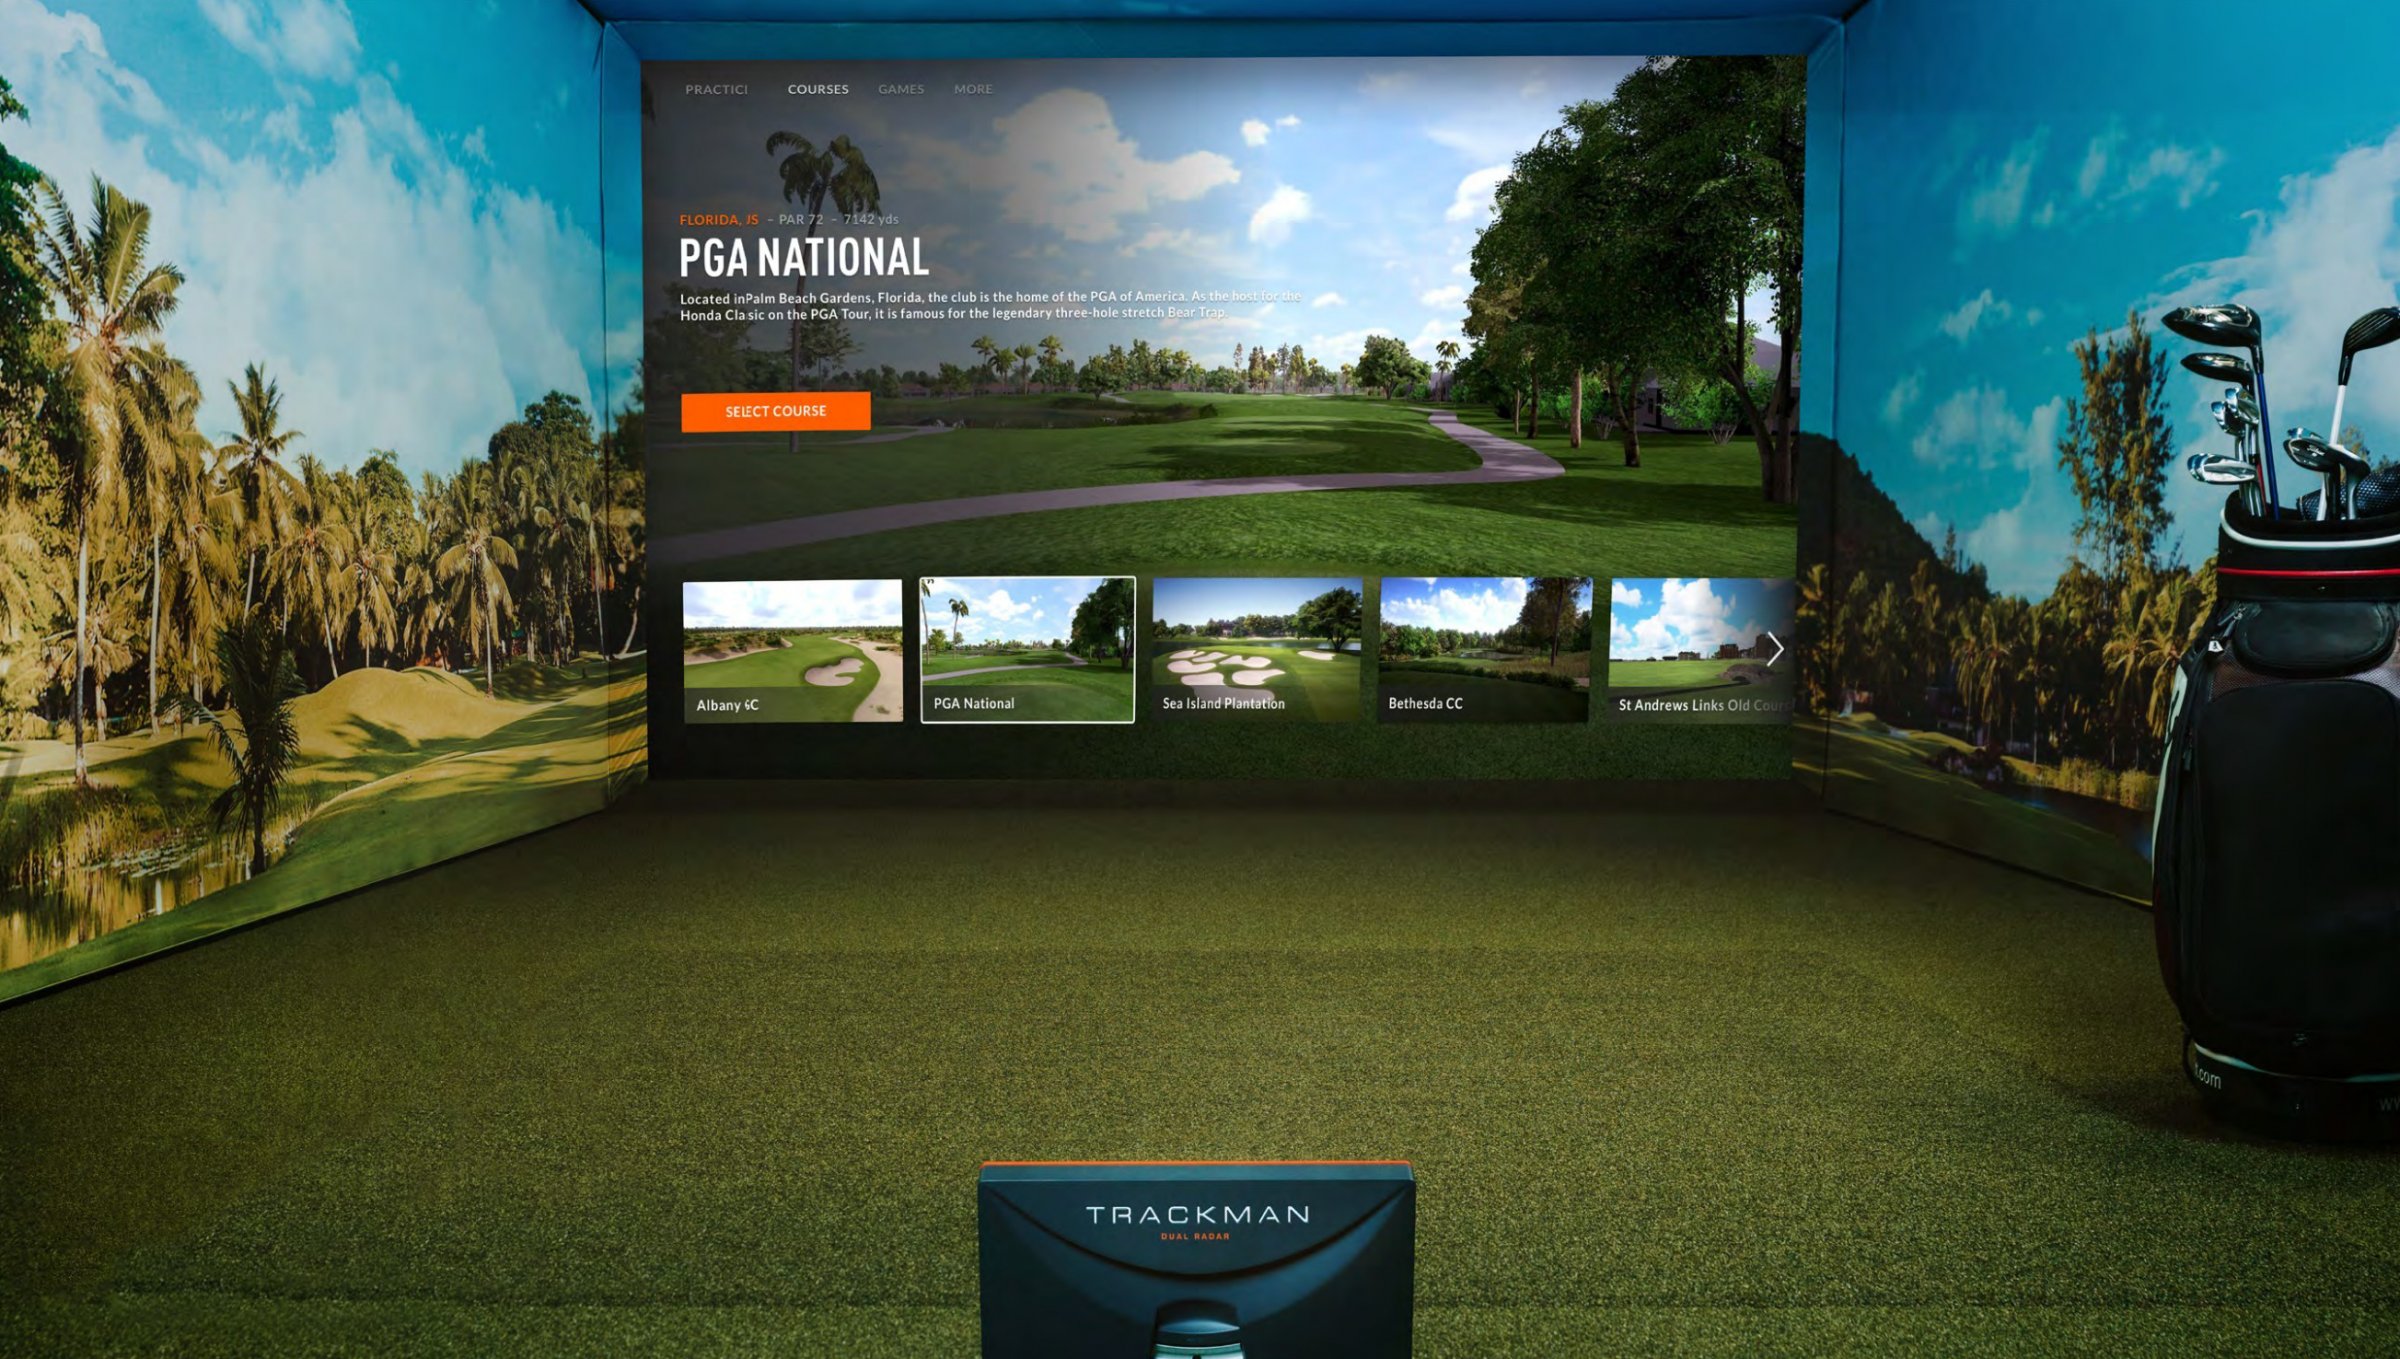 TrackMan indoor golf simulator